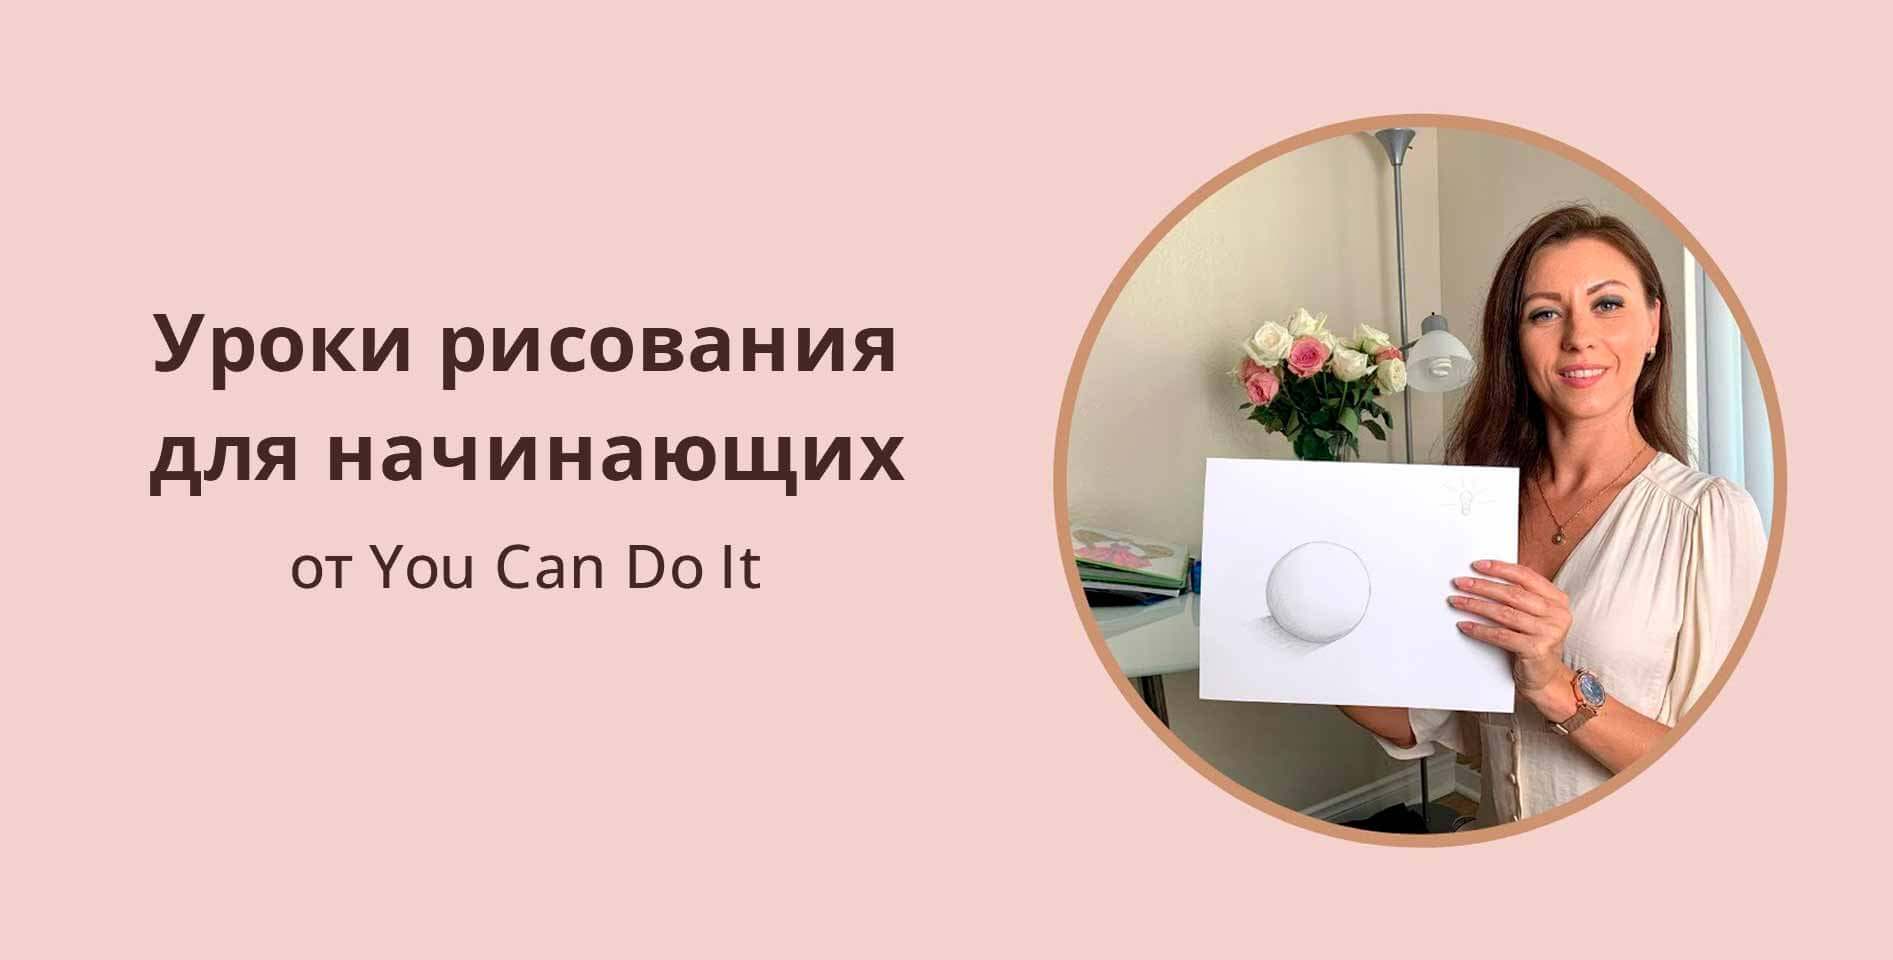 You Can Do It — Уроки рисования для начинающих